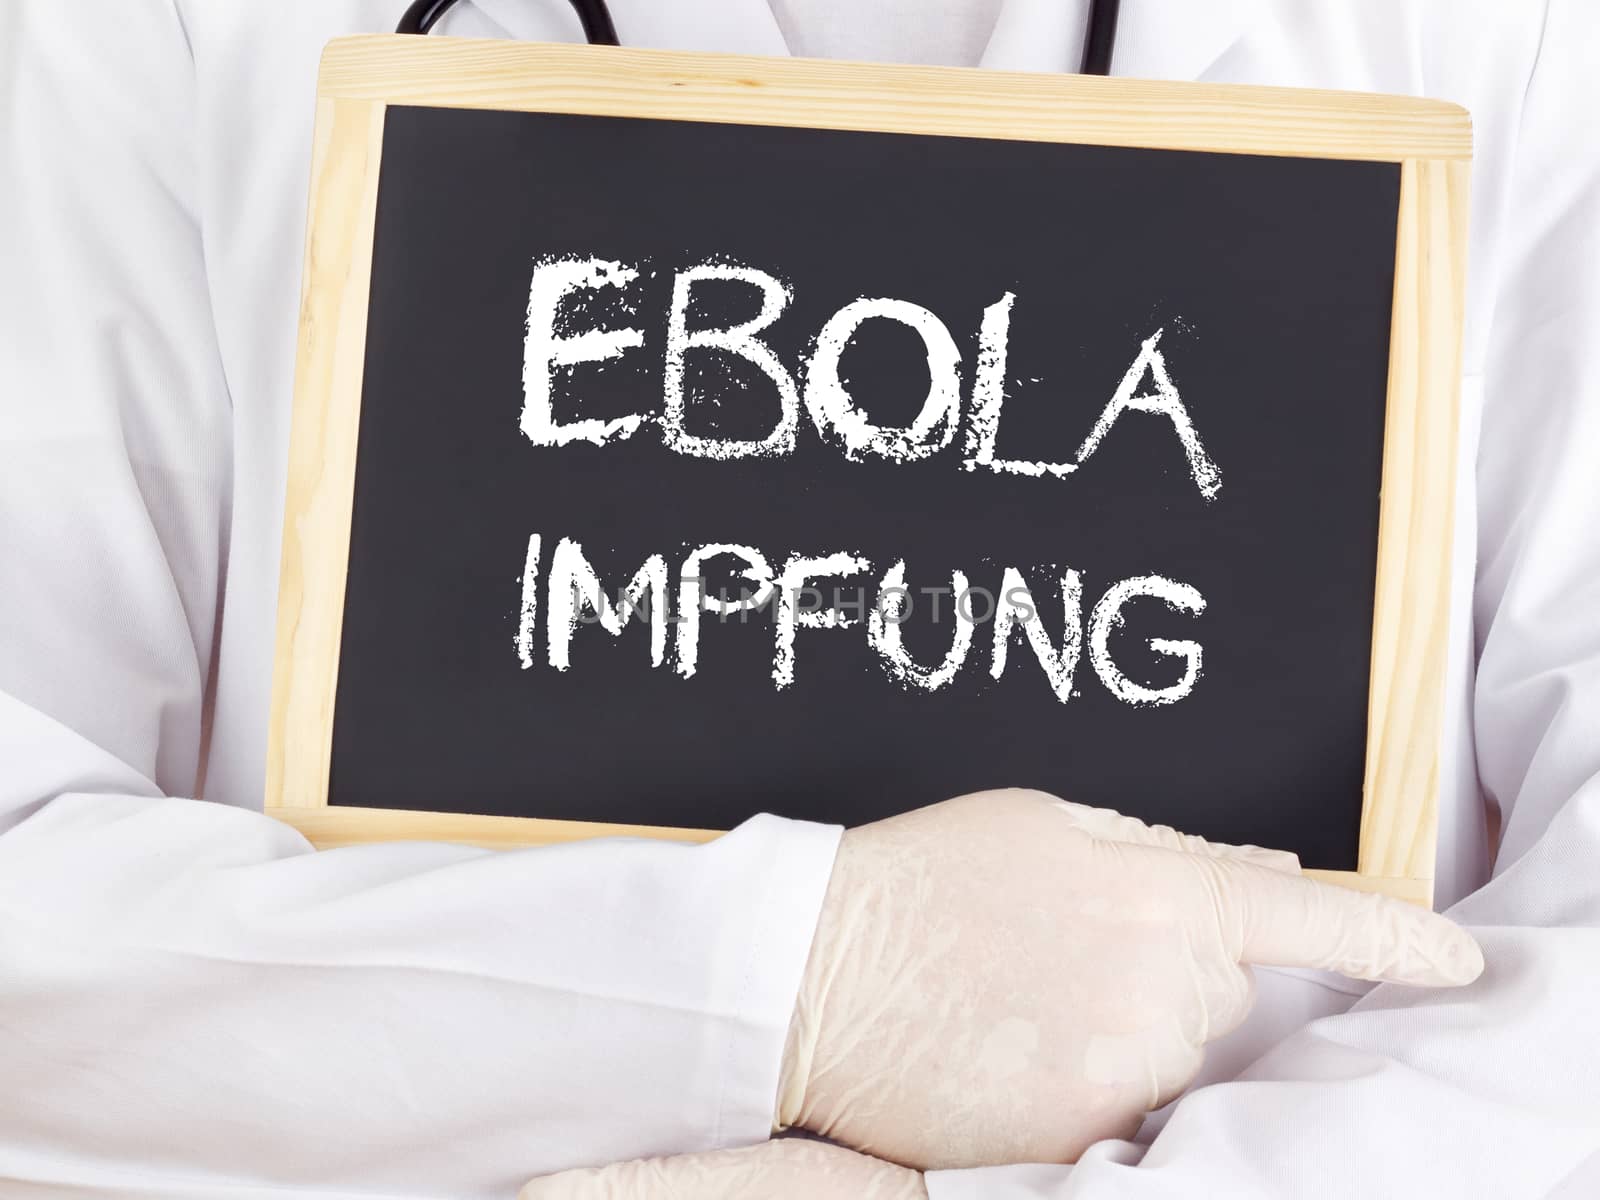 Doctor shows information: Ebola immunization in german